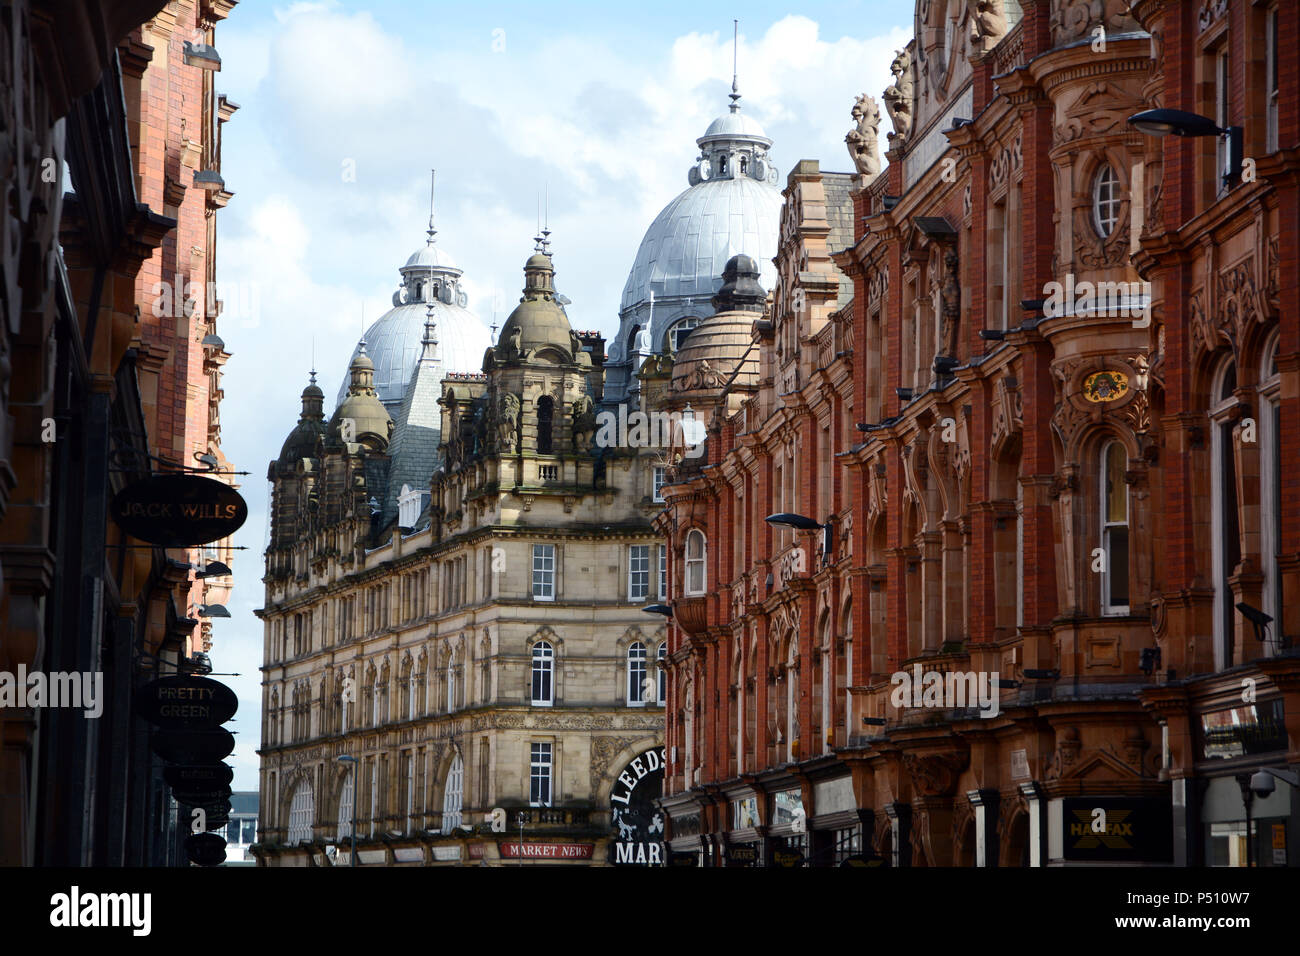 La arquitectura gótica victoriana del siglo XIX sobre una zona peatonal cerca del mercado Kirkgate en la ciudad inglesa de Leeds, Yorkshire, Reino Unido. Foto de stock